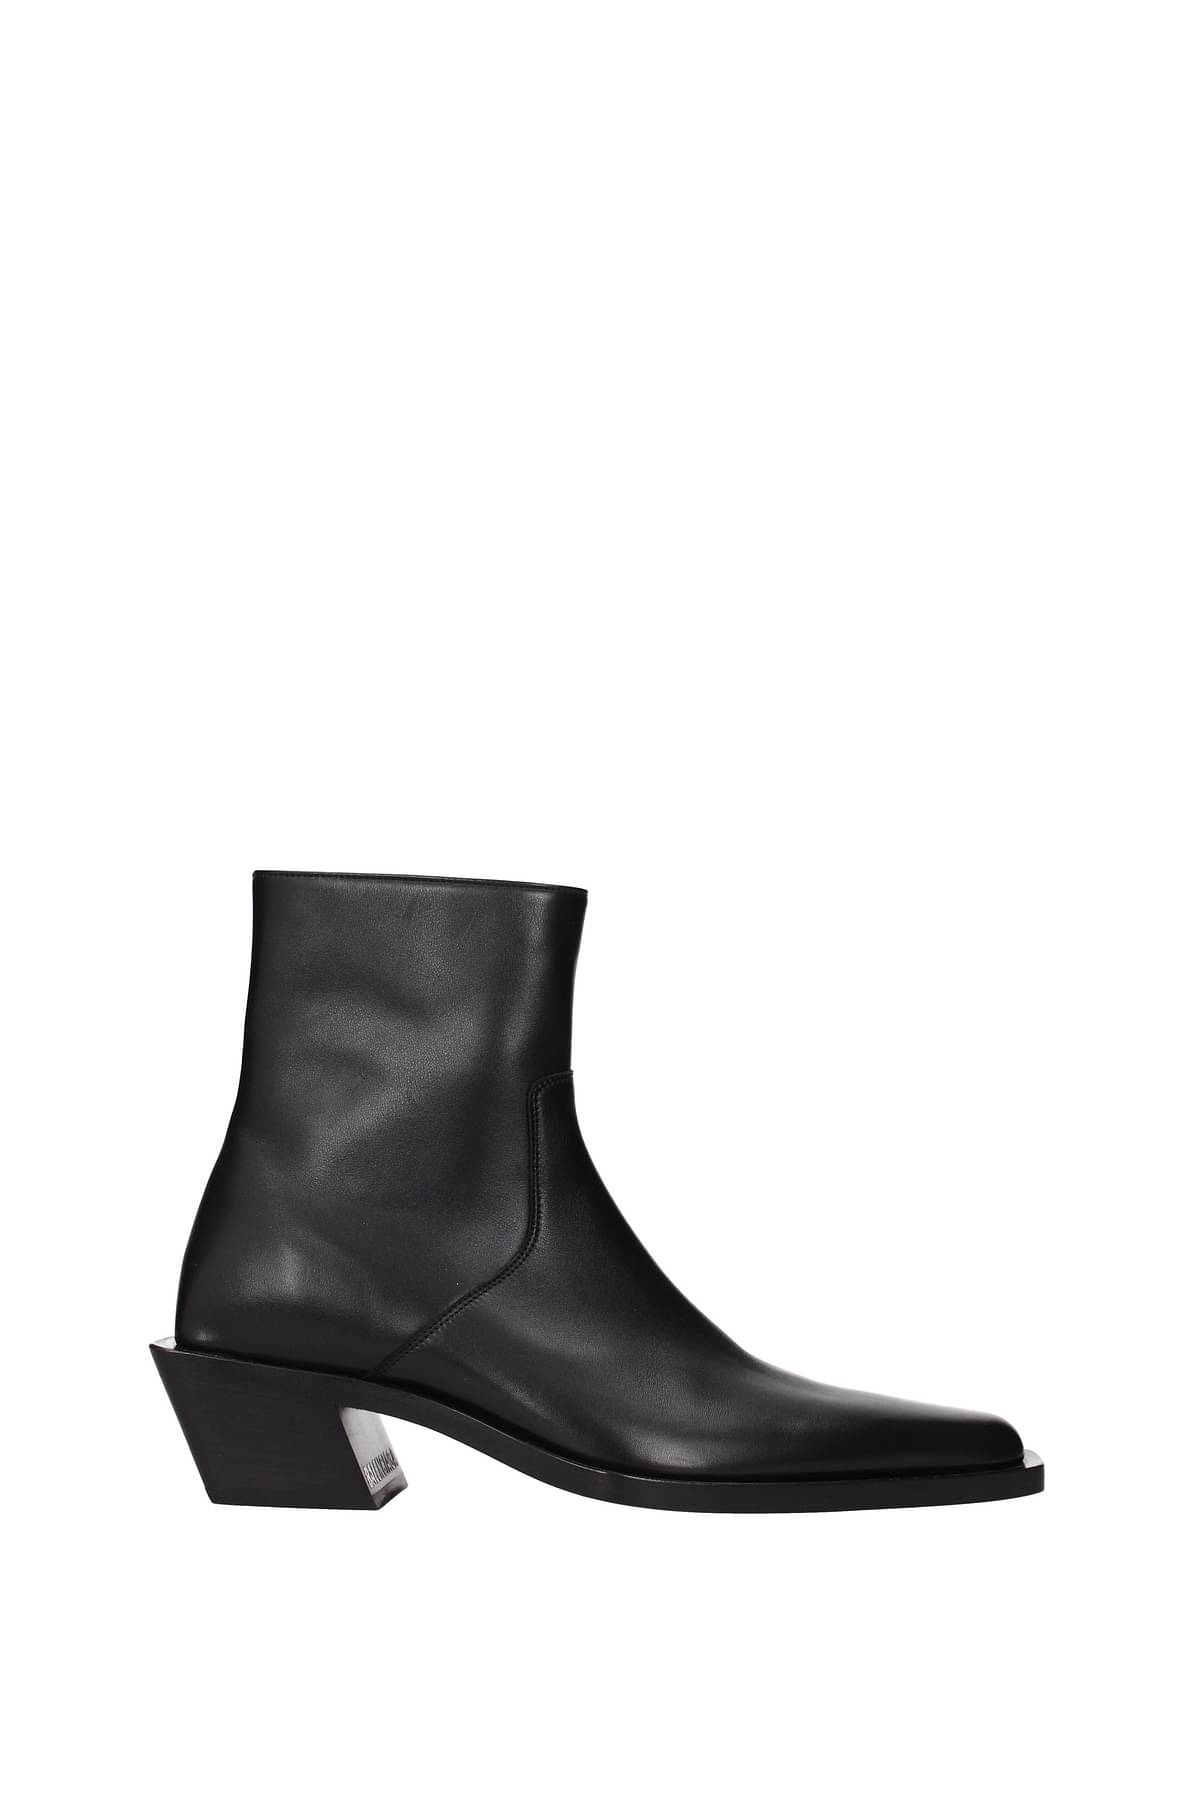 Balenciaga 'Tiaga' Leather Ankle Boots Men'S Black for Men